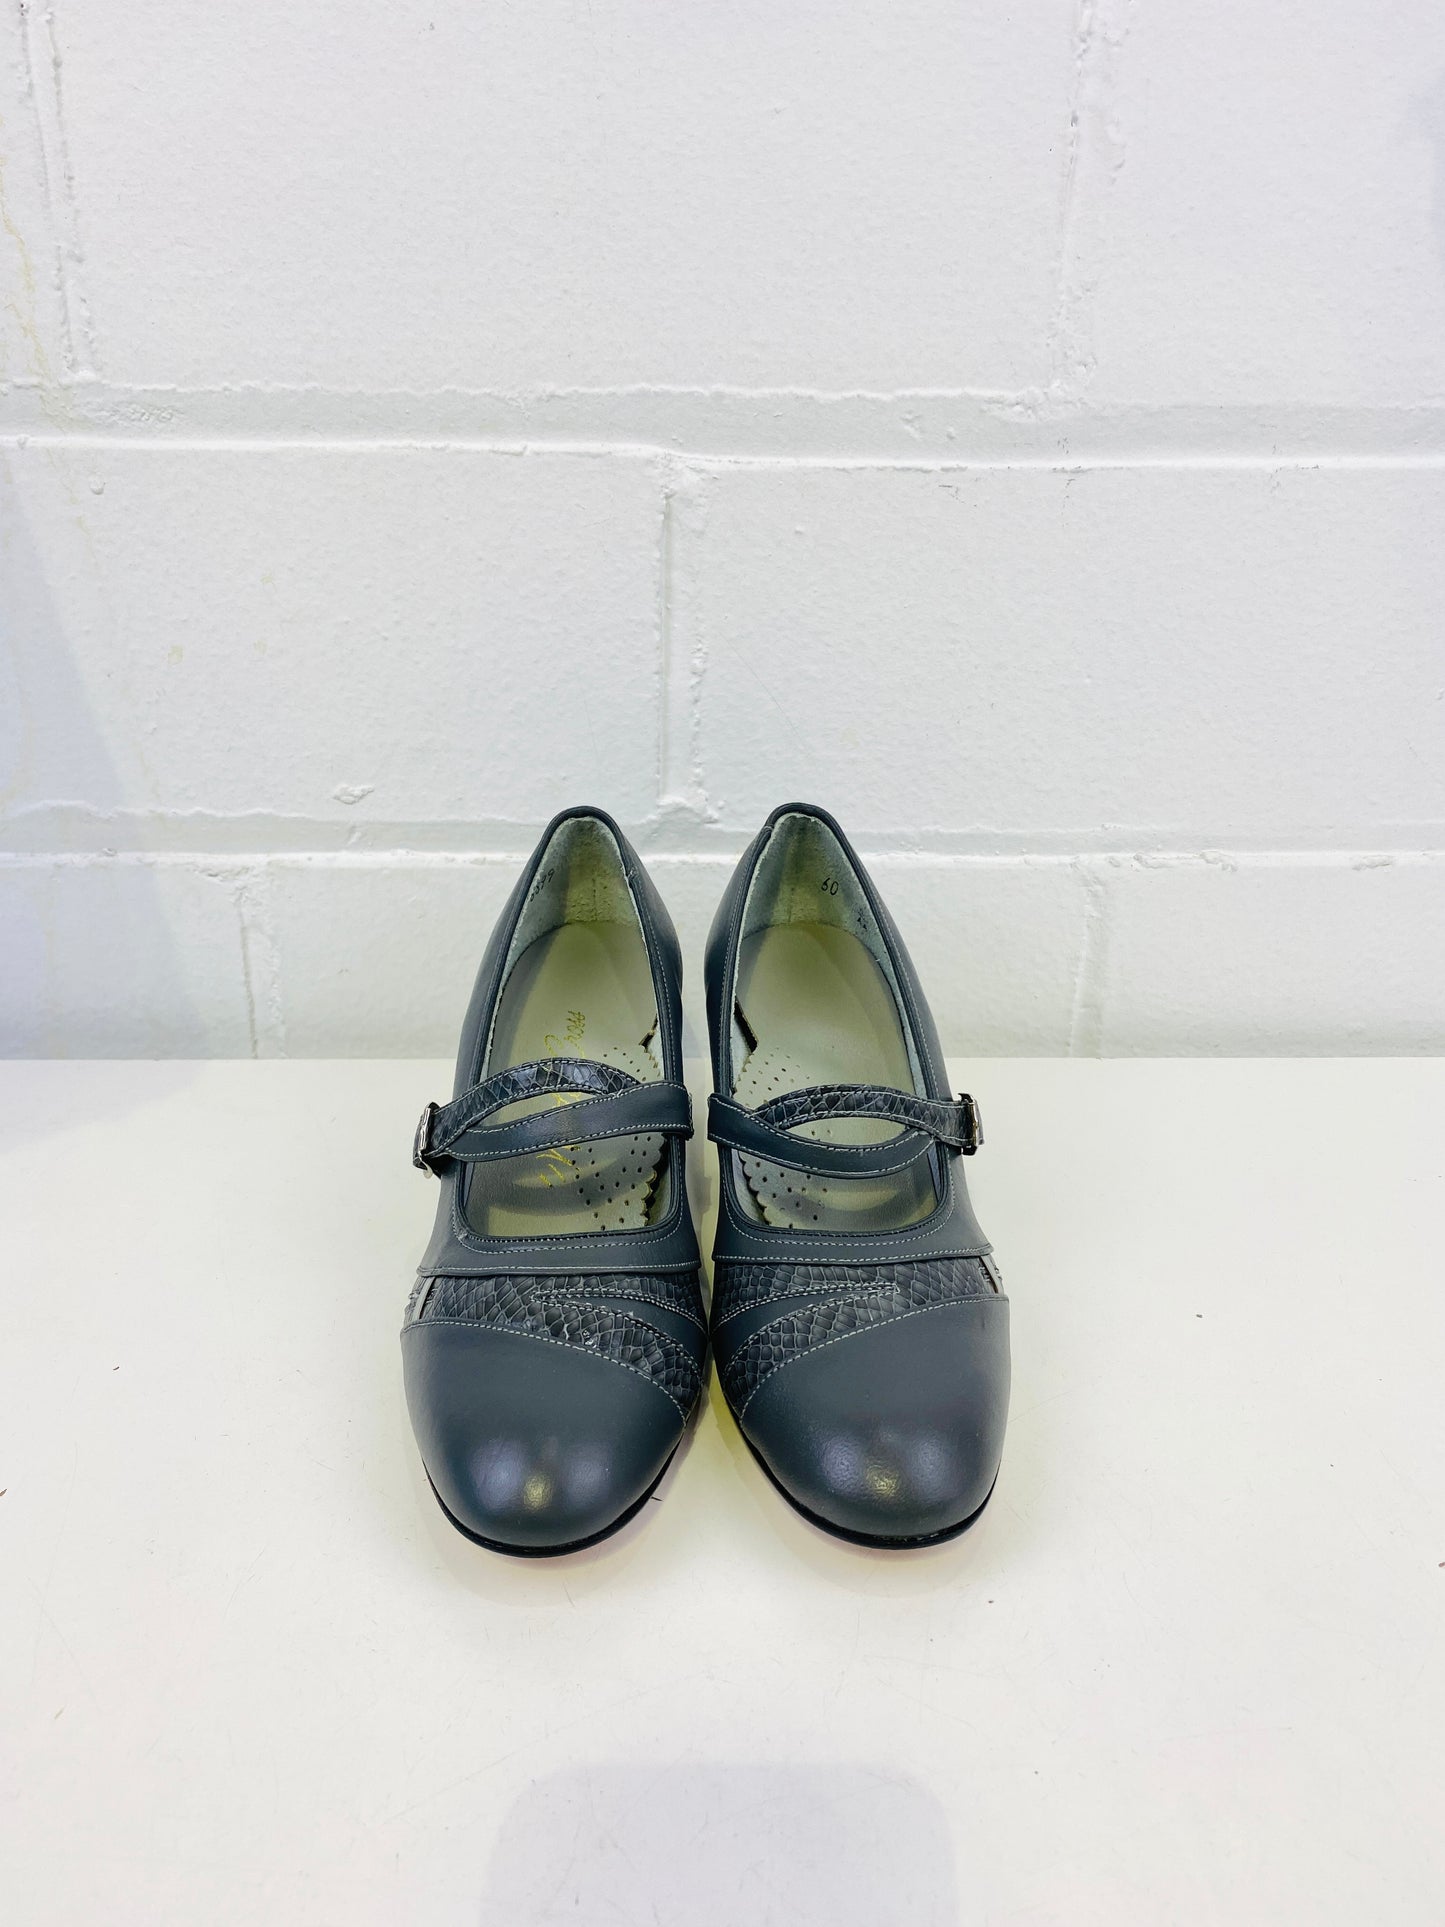 Vintage Deadstock Shoes, Women's 1980s Grey Leather Mid-Heel Pumps, NOS, 8485